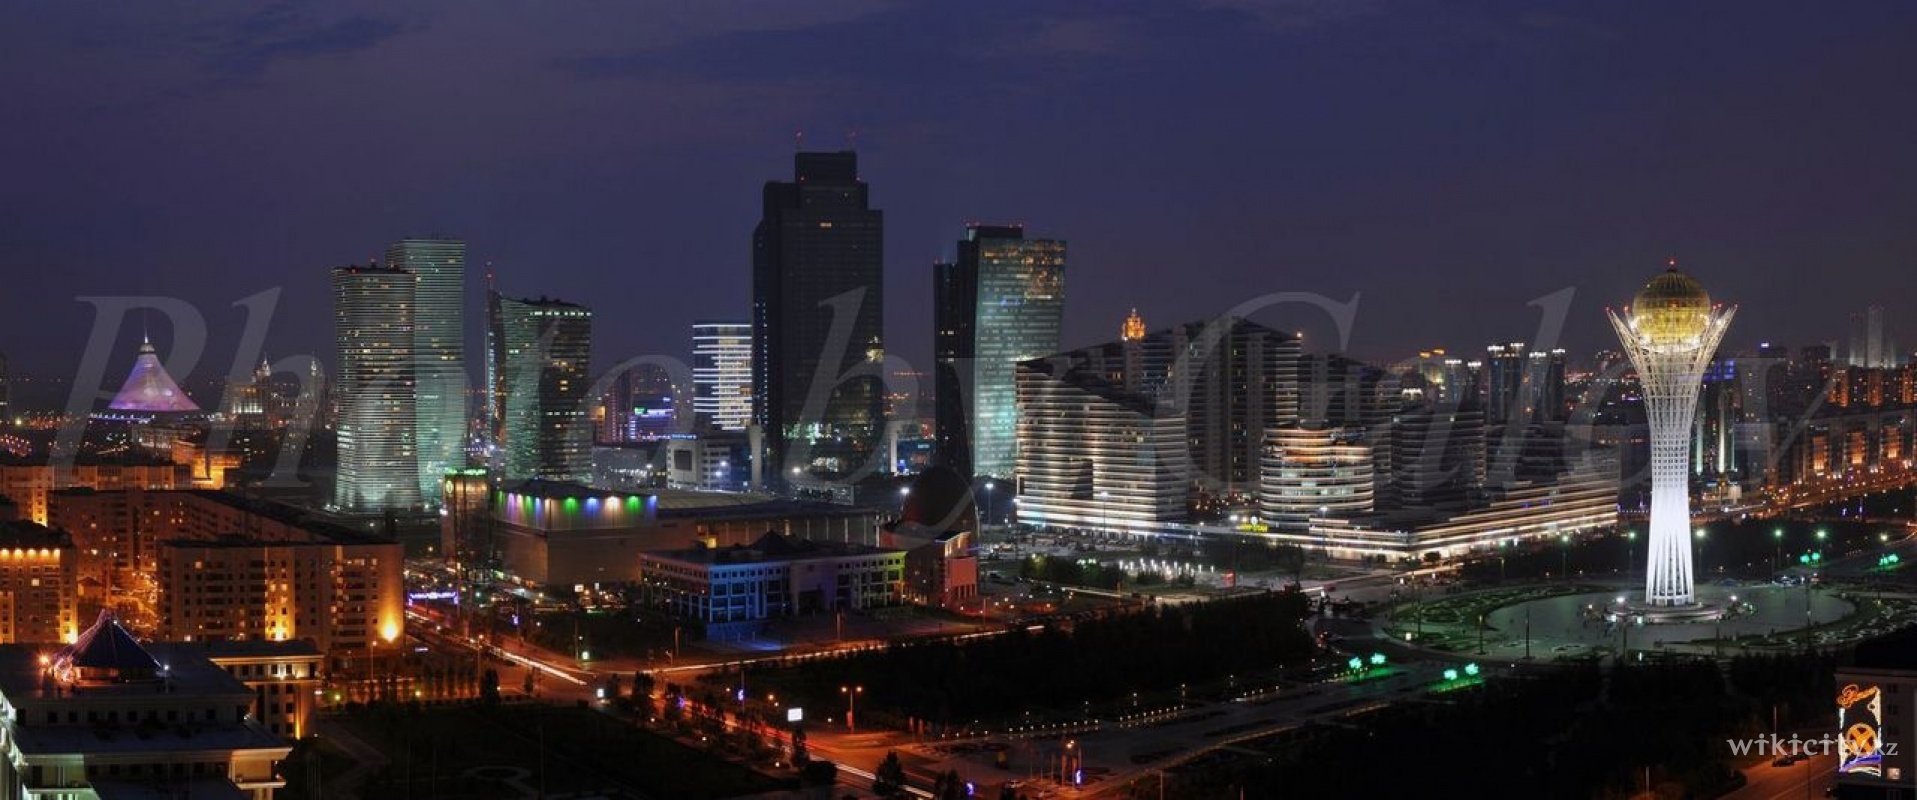 Фото La Mansarde - Астана. Ночной вид.